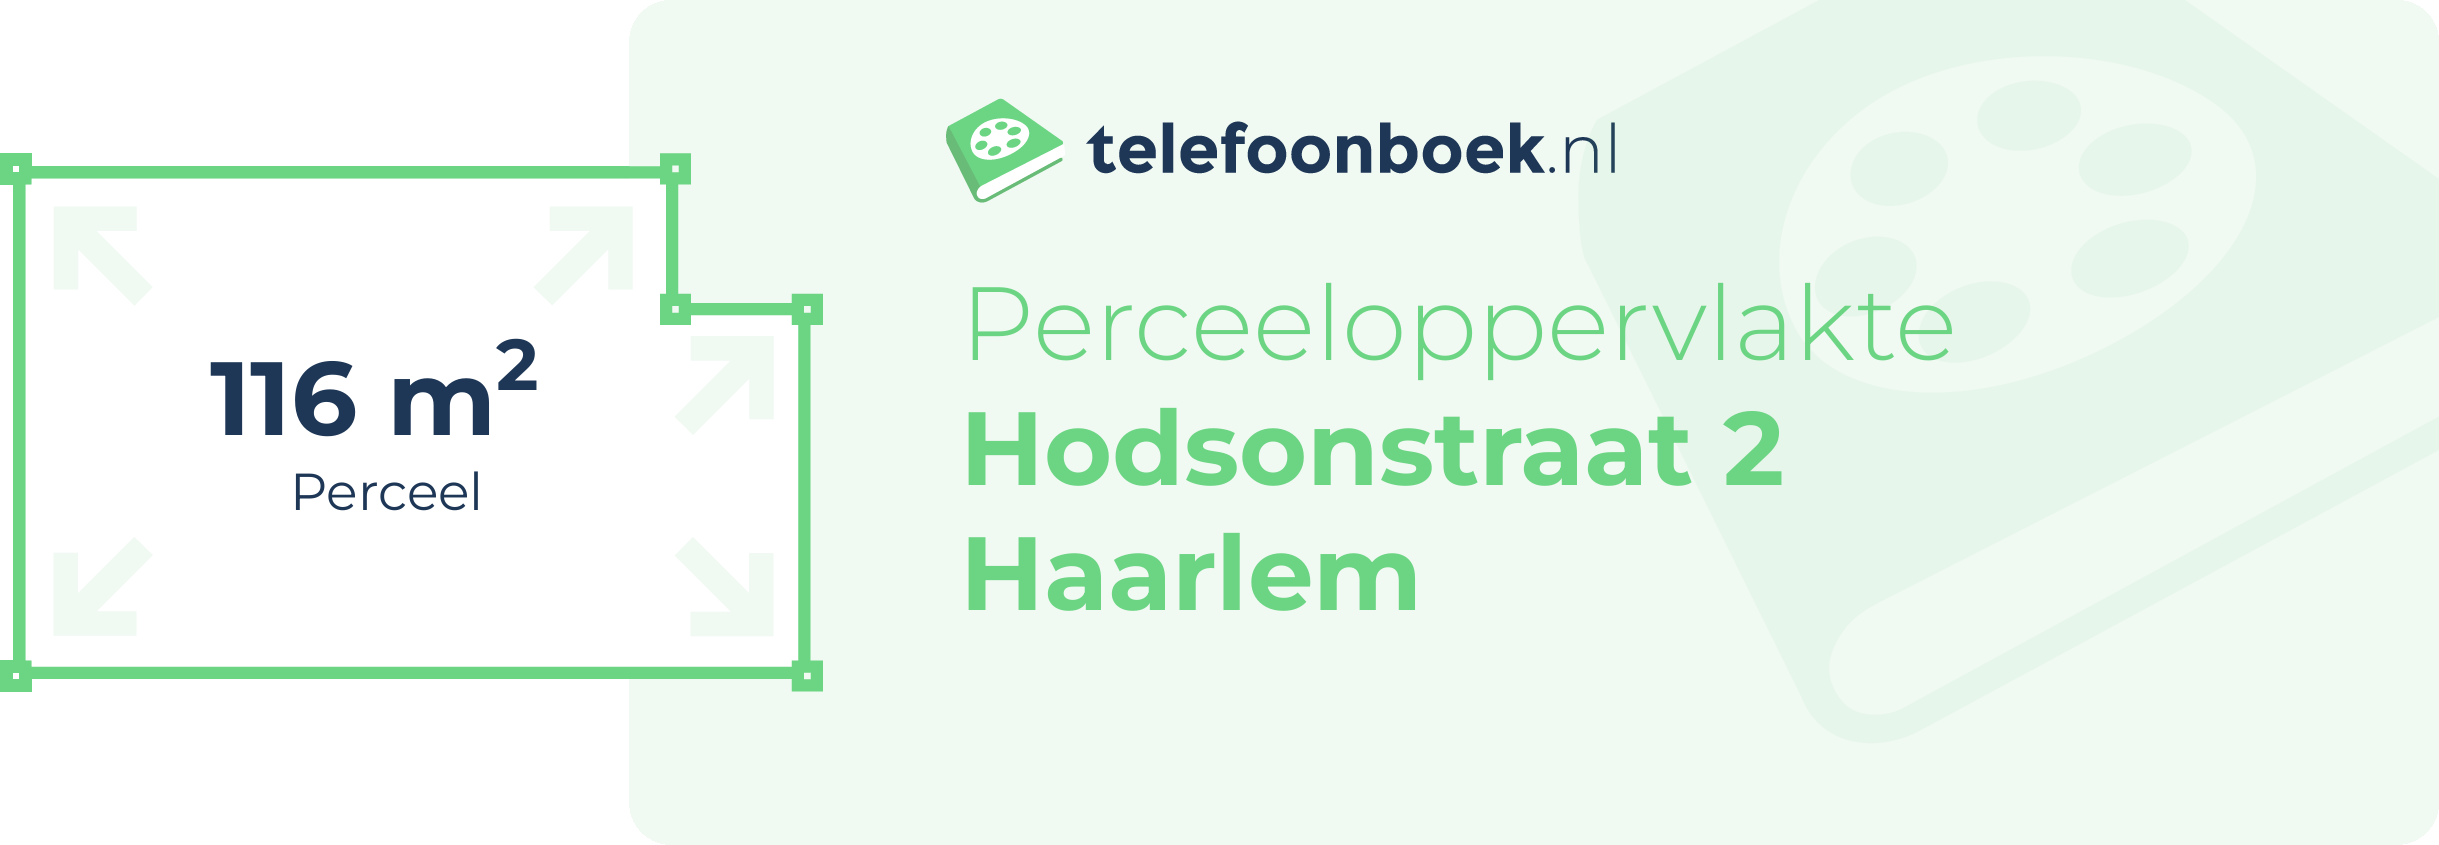 Perceeloppervlakte Hodsonstraat 2 Haarlem